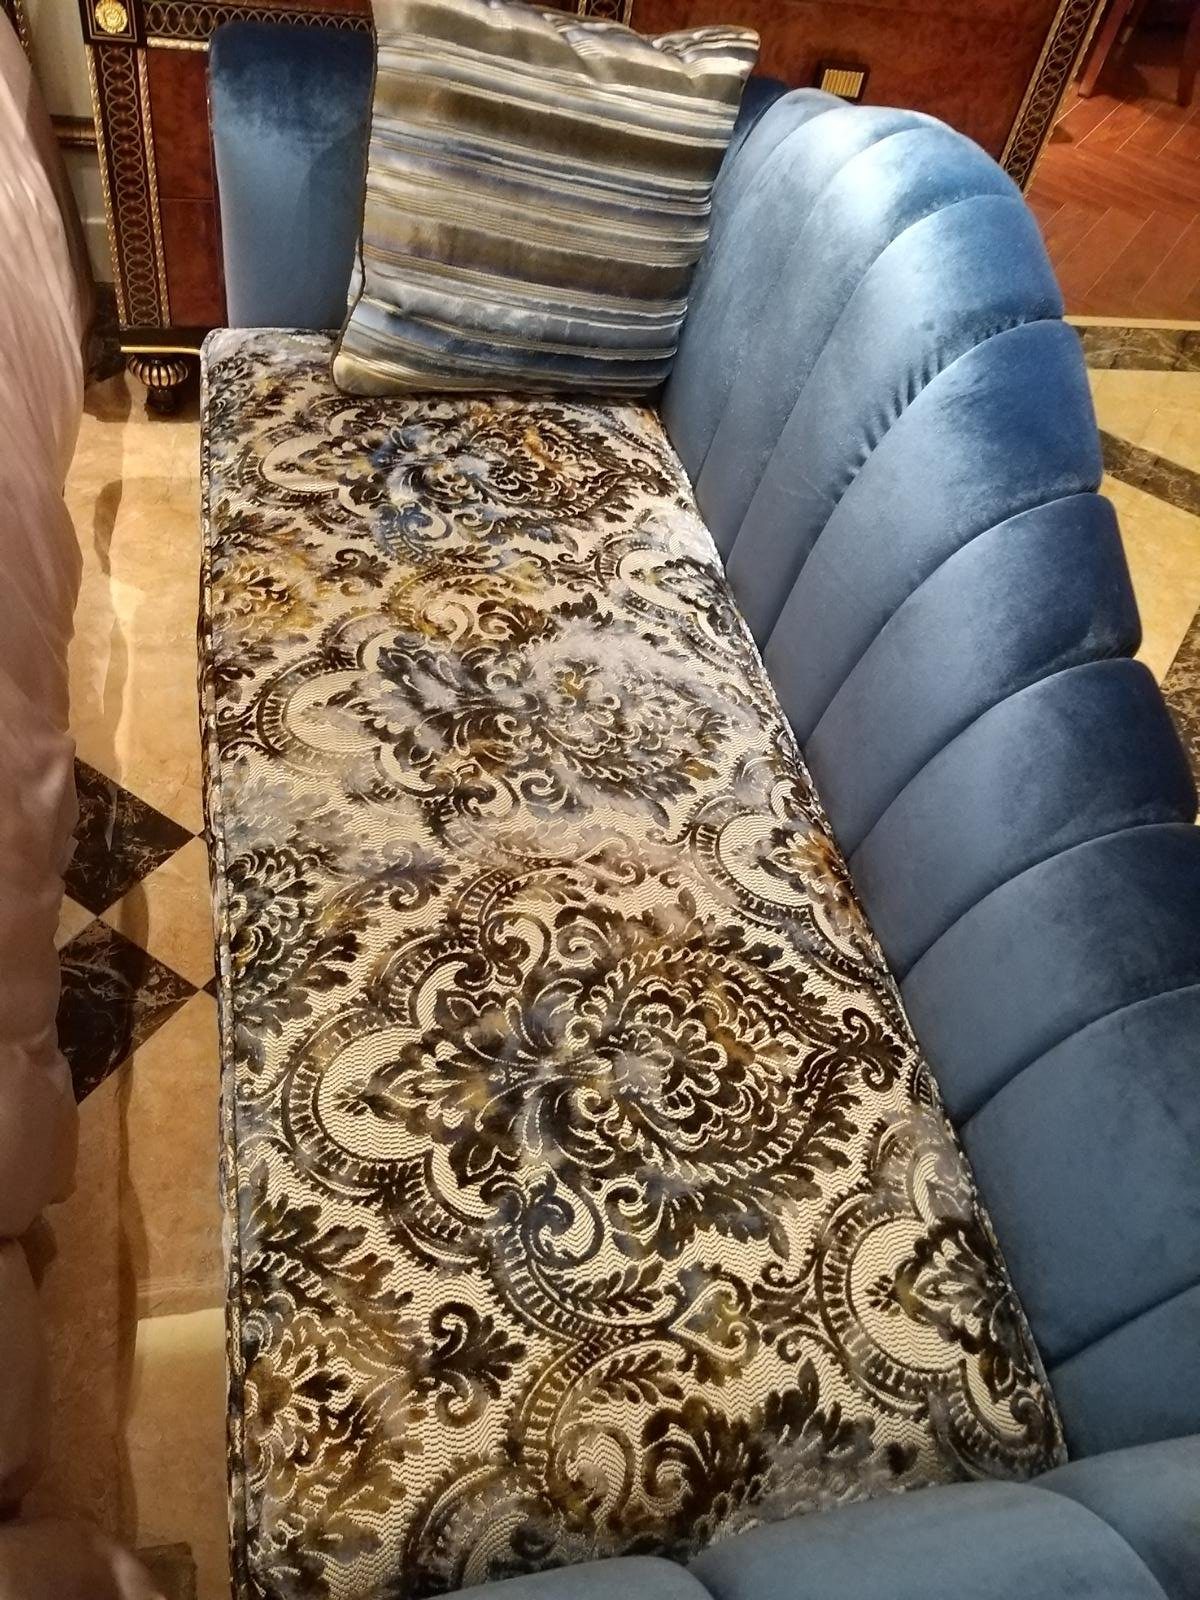 JVmoebel Sofa Chaiselounge Barock Blauer Antik Stil in Europe Chaiselongue Rokoko, Textil Made Liege